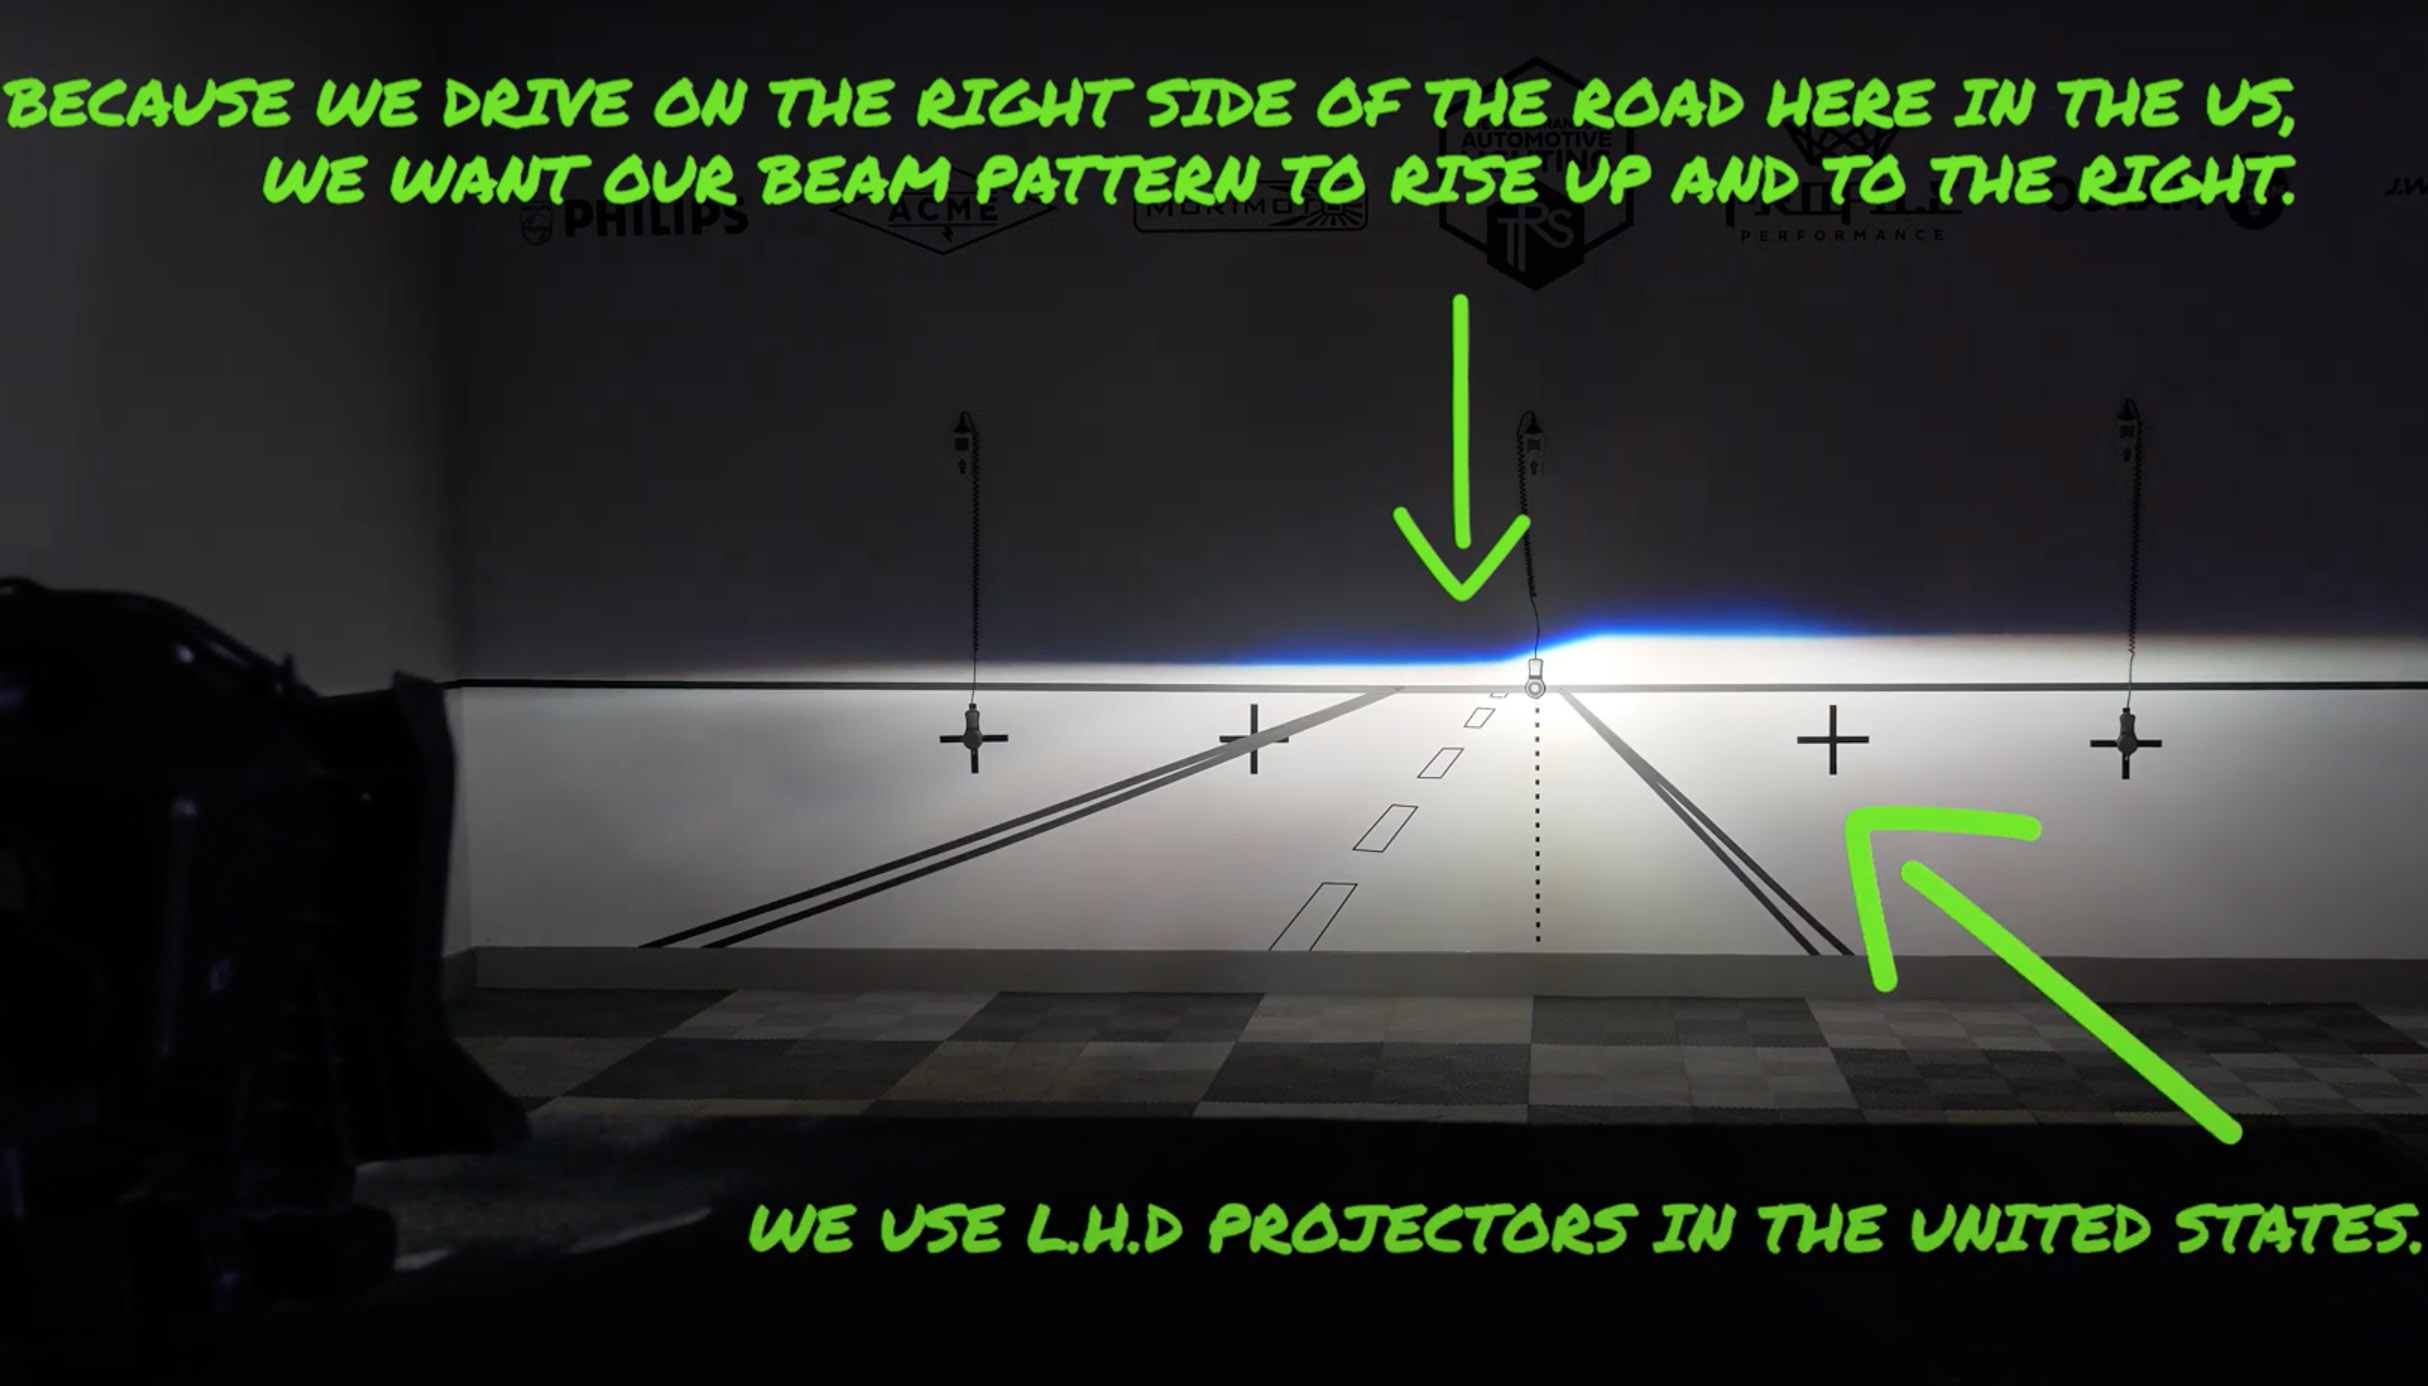 How HID Headlights Work & How to Upgrade to HID Headlights